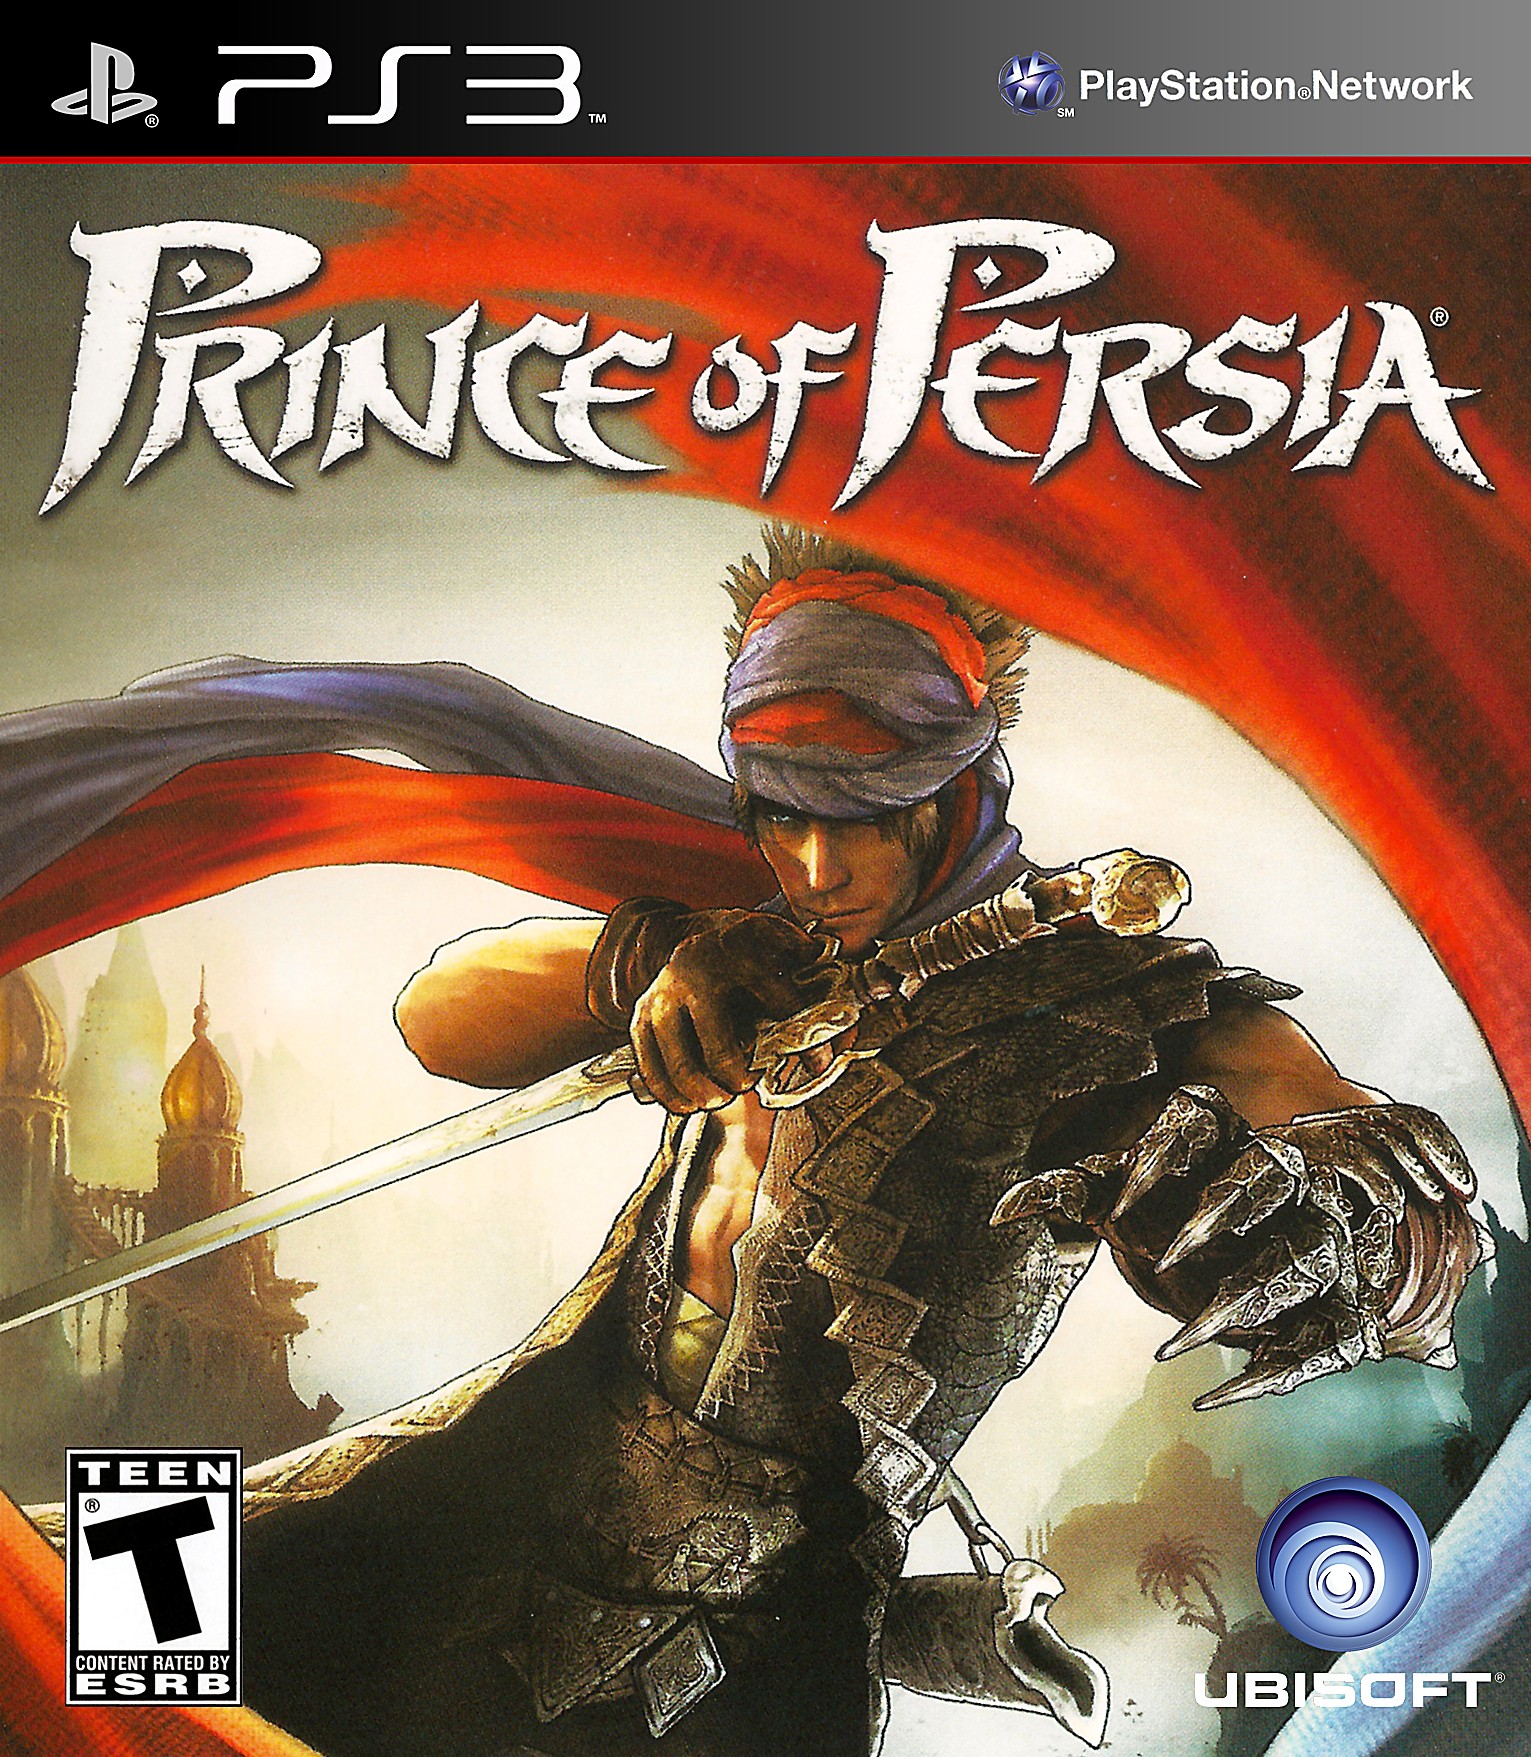 'Prince of Persia'